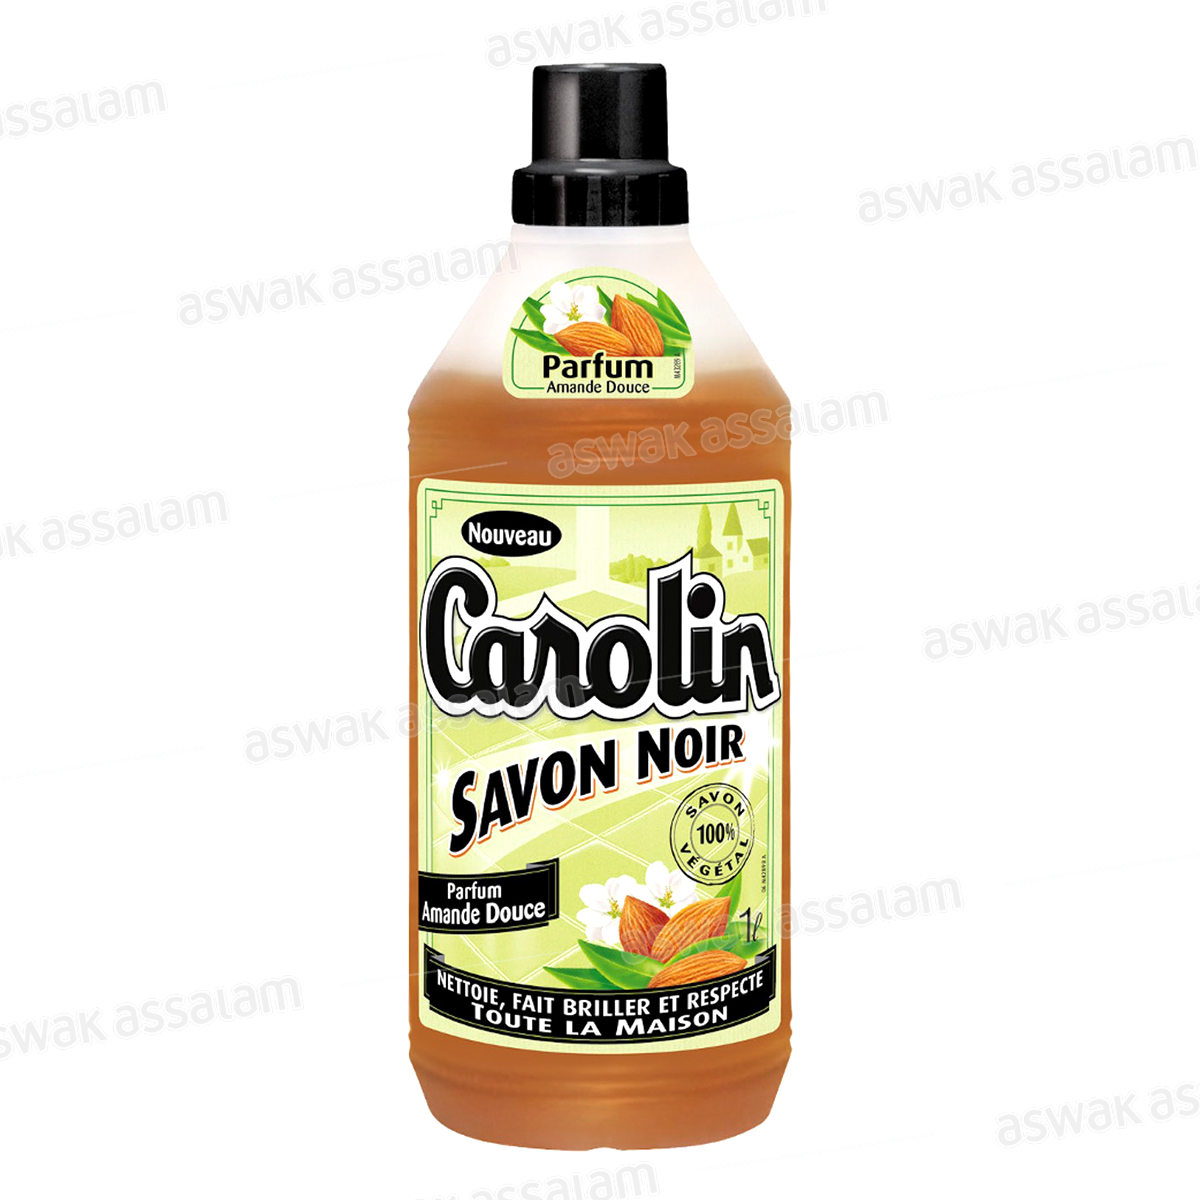 NETTOYANT SOL SAVON NOIR 1L CAROLIN